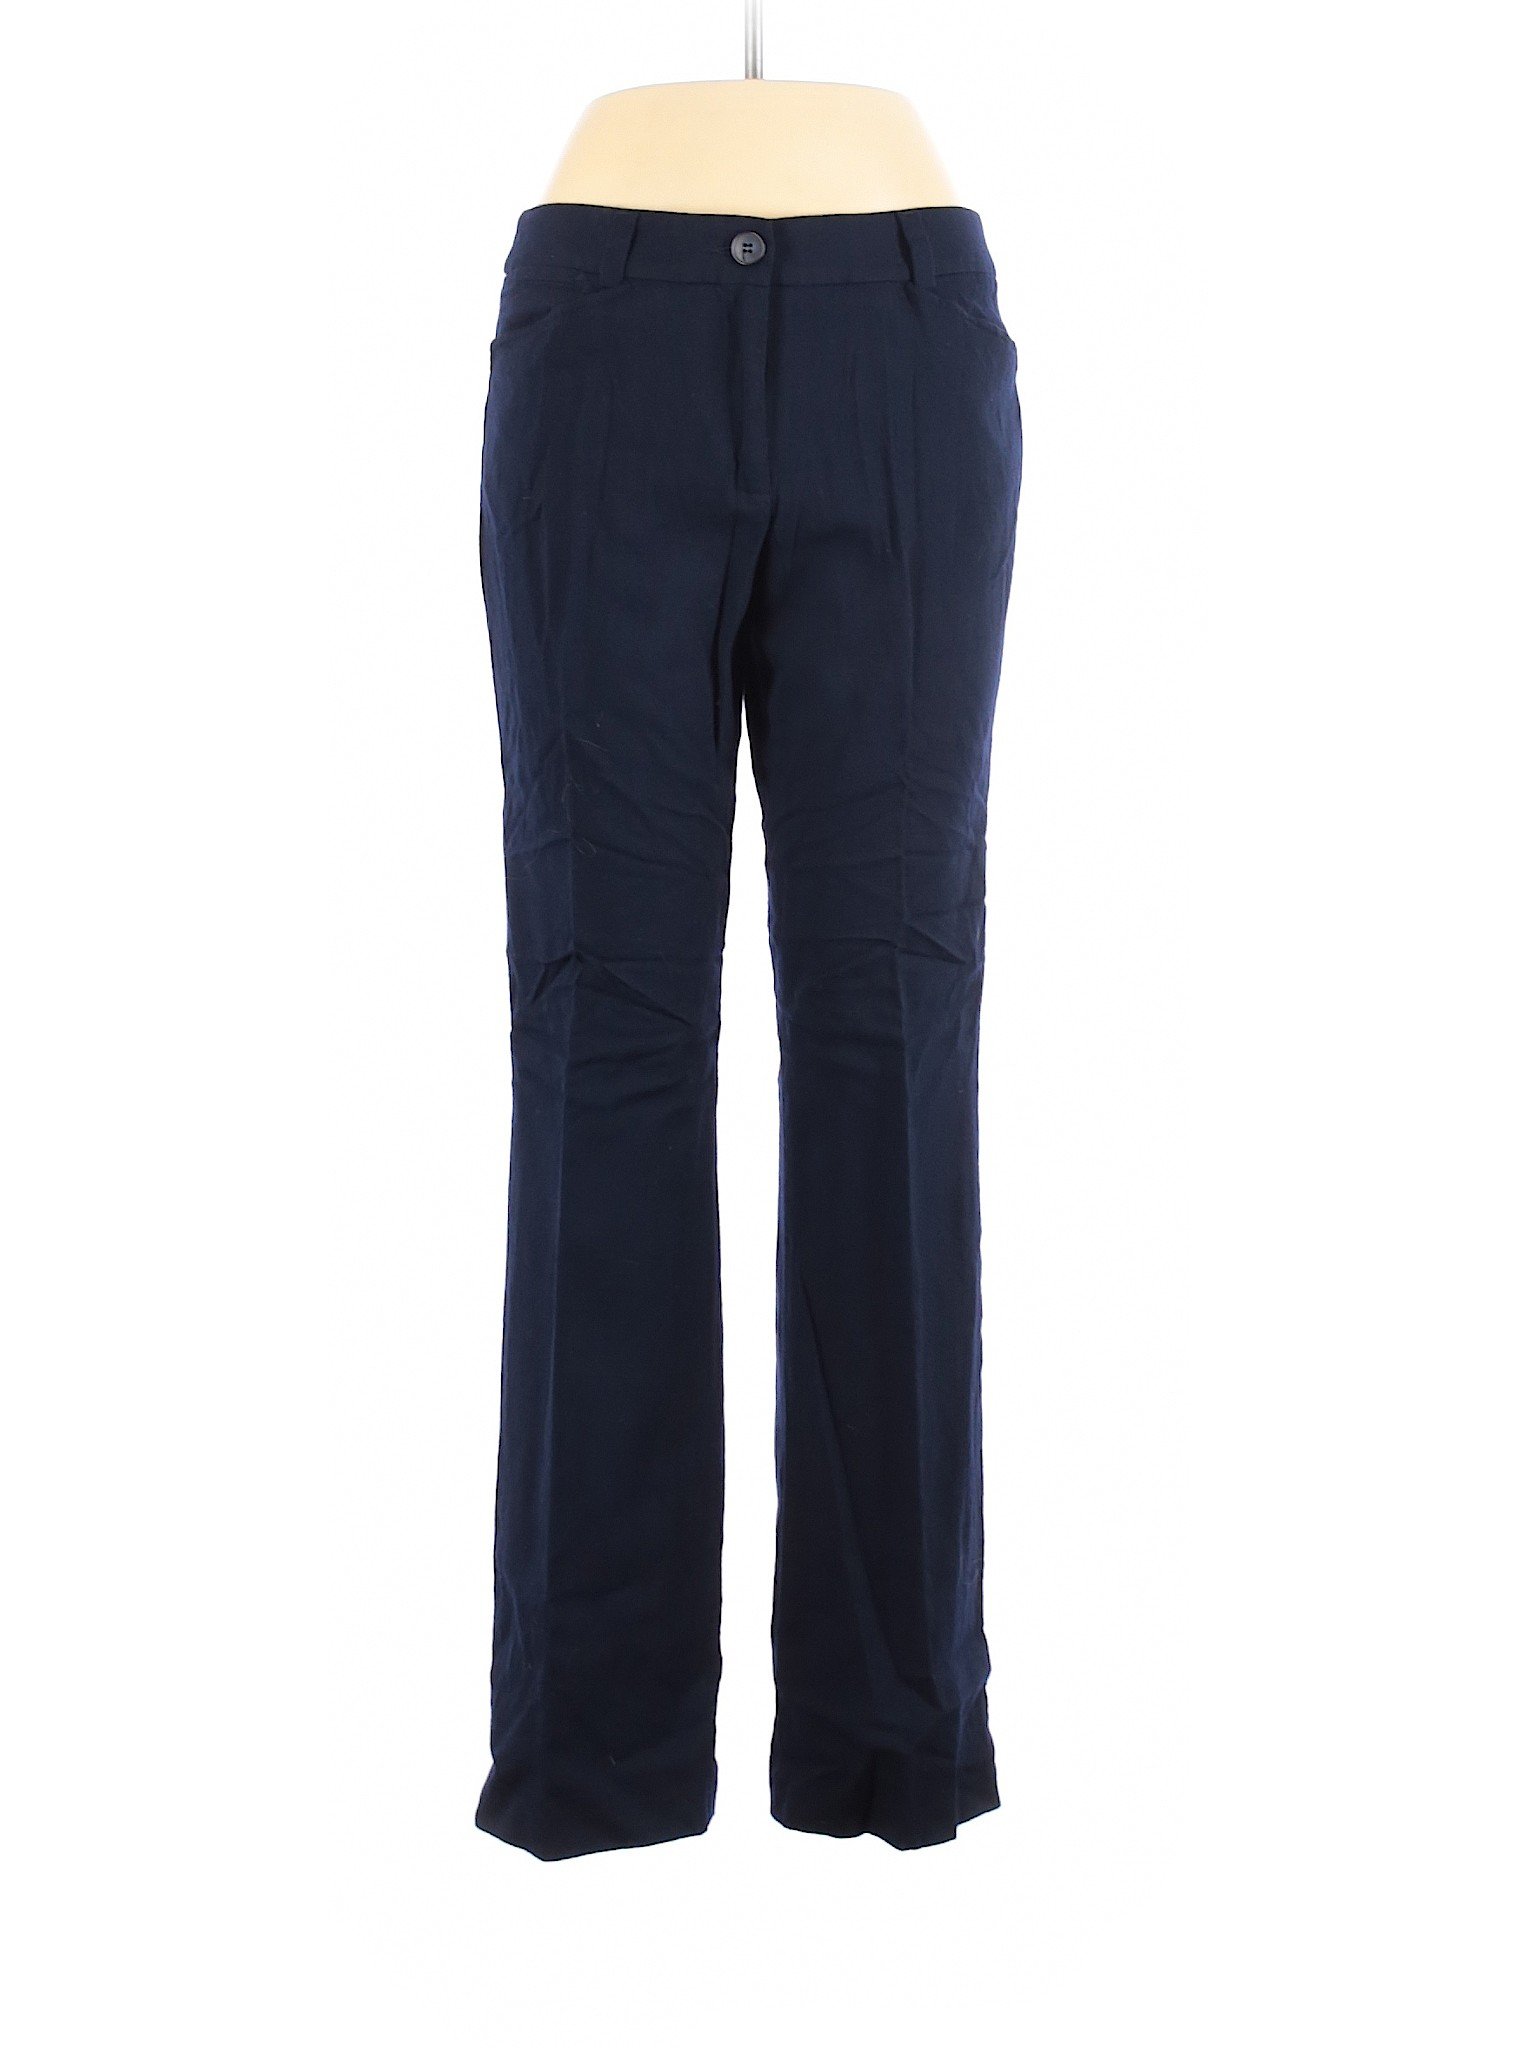 Pendleton Women Blue Wool Pants 10 | eBay